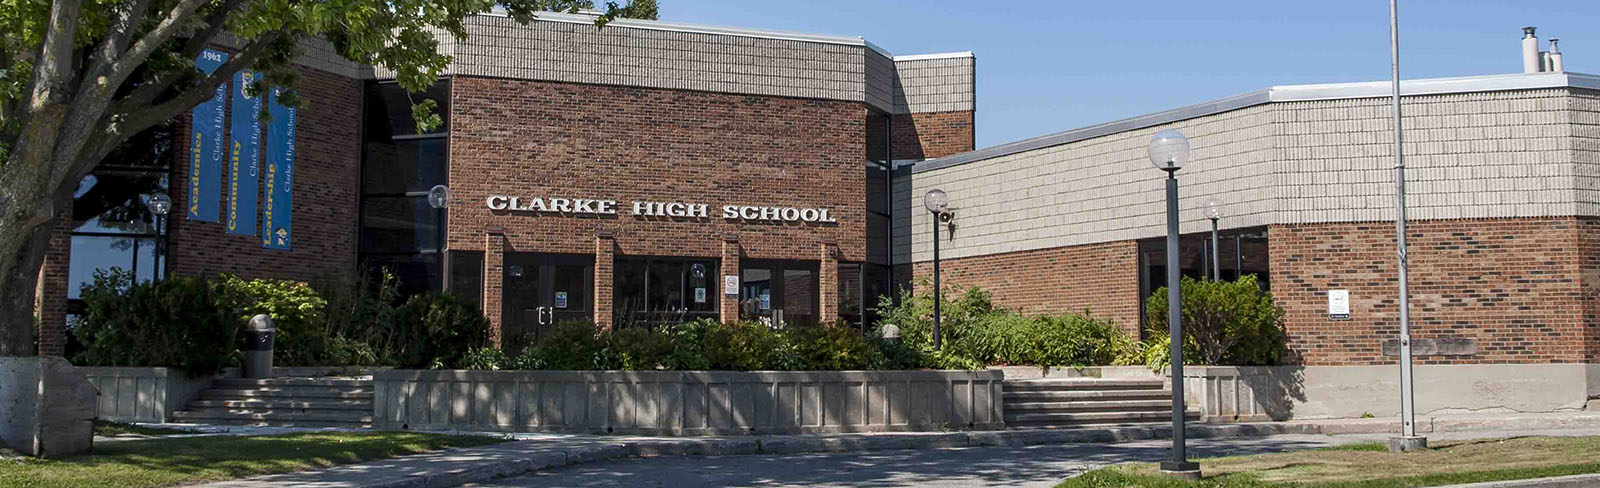 image of Clarke High School